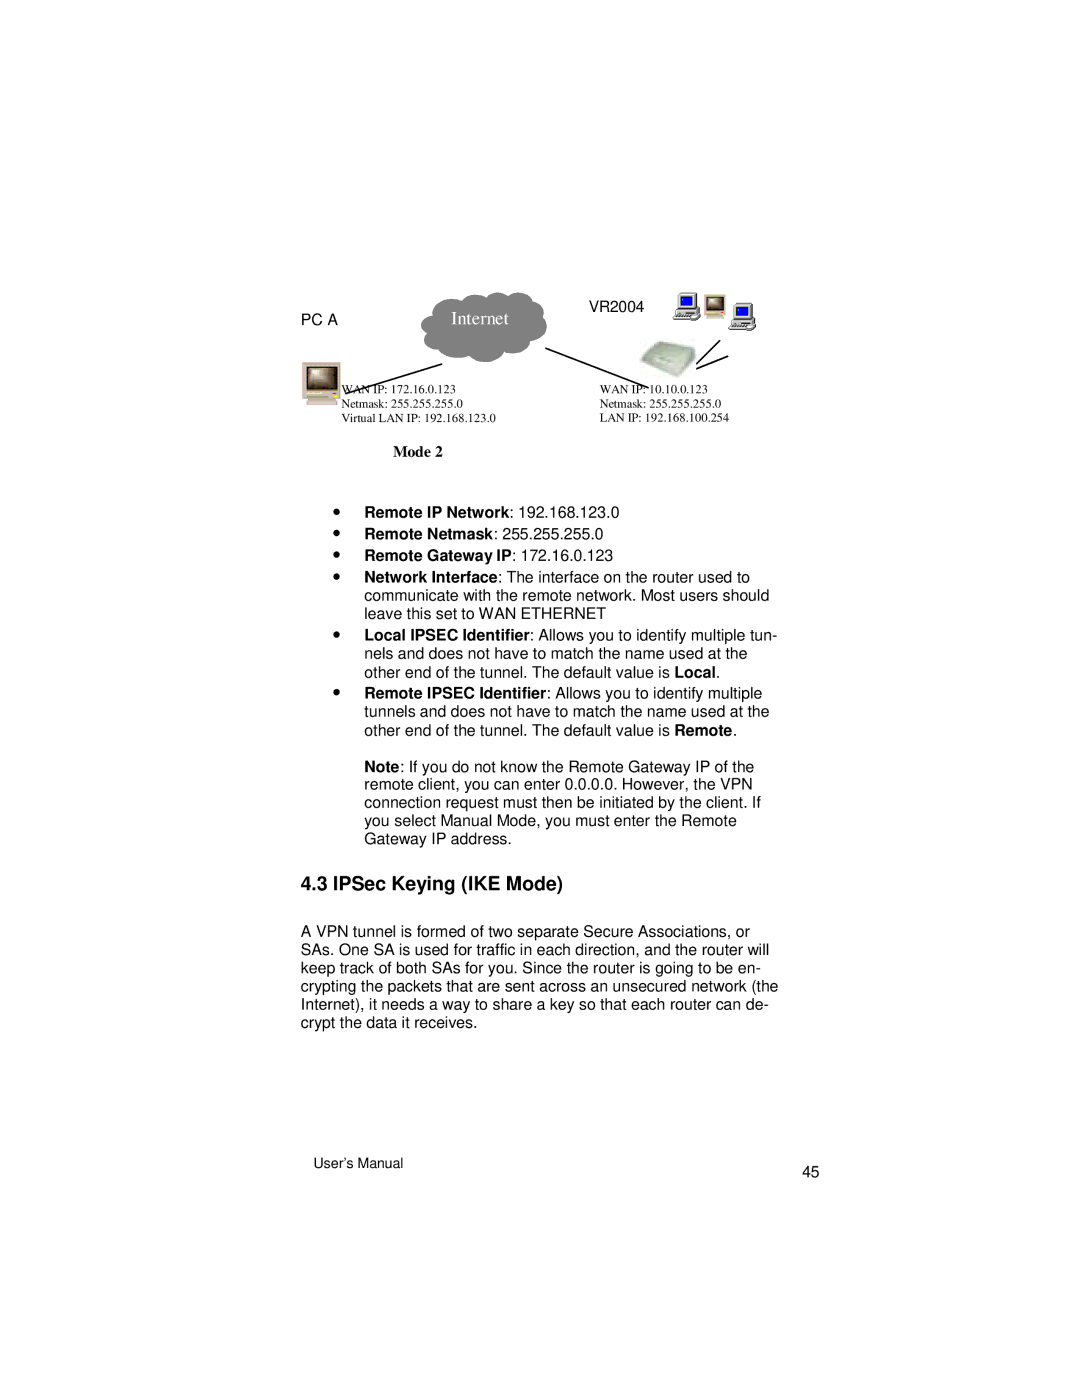 Asante Technologies VR2004 Series user manual IPSec Keying IKE Mode, Remote IP Network 